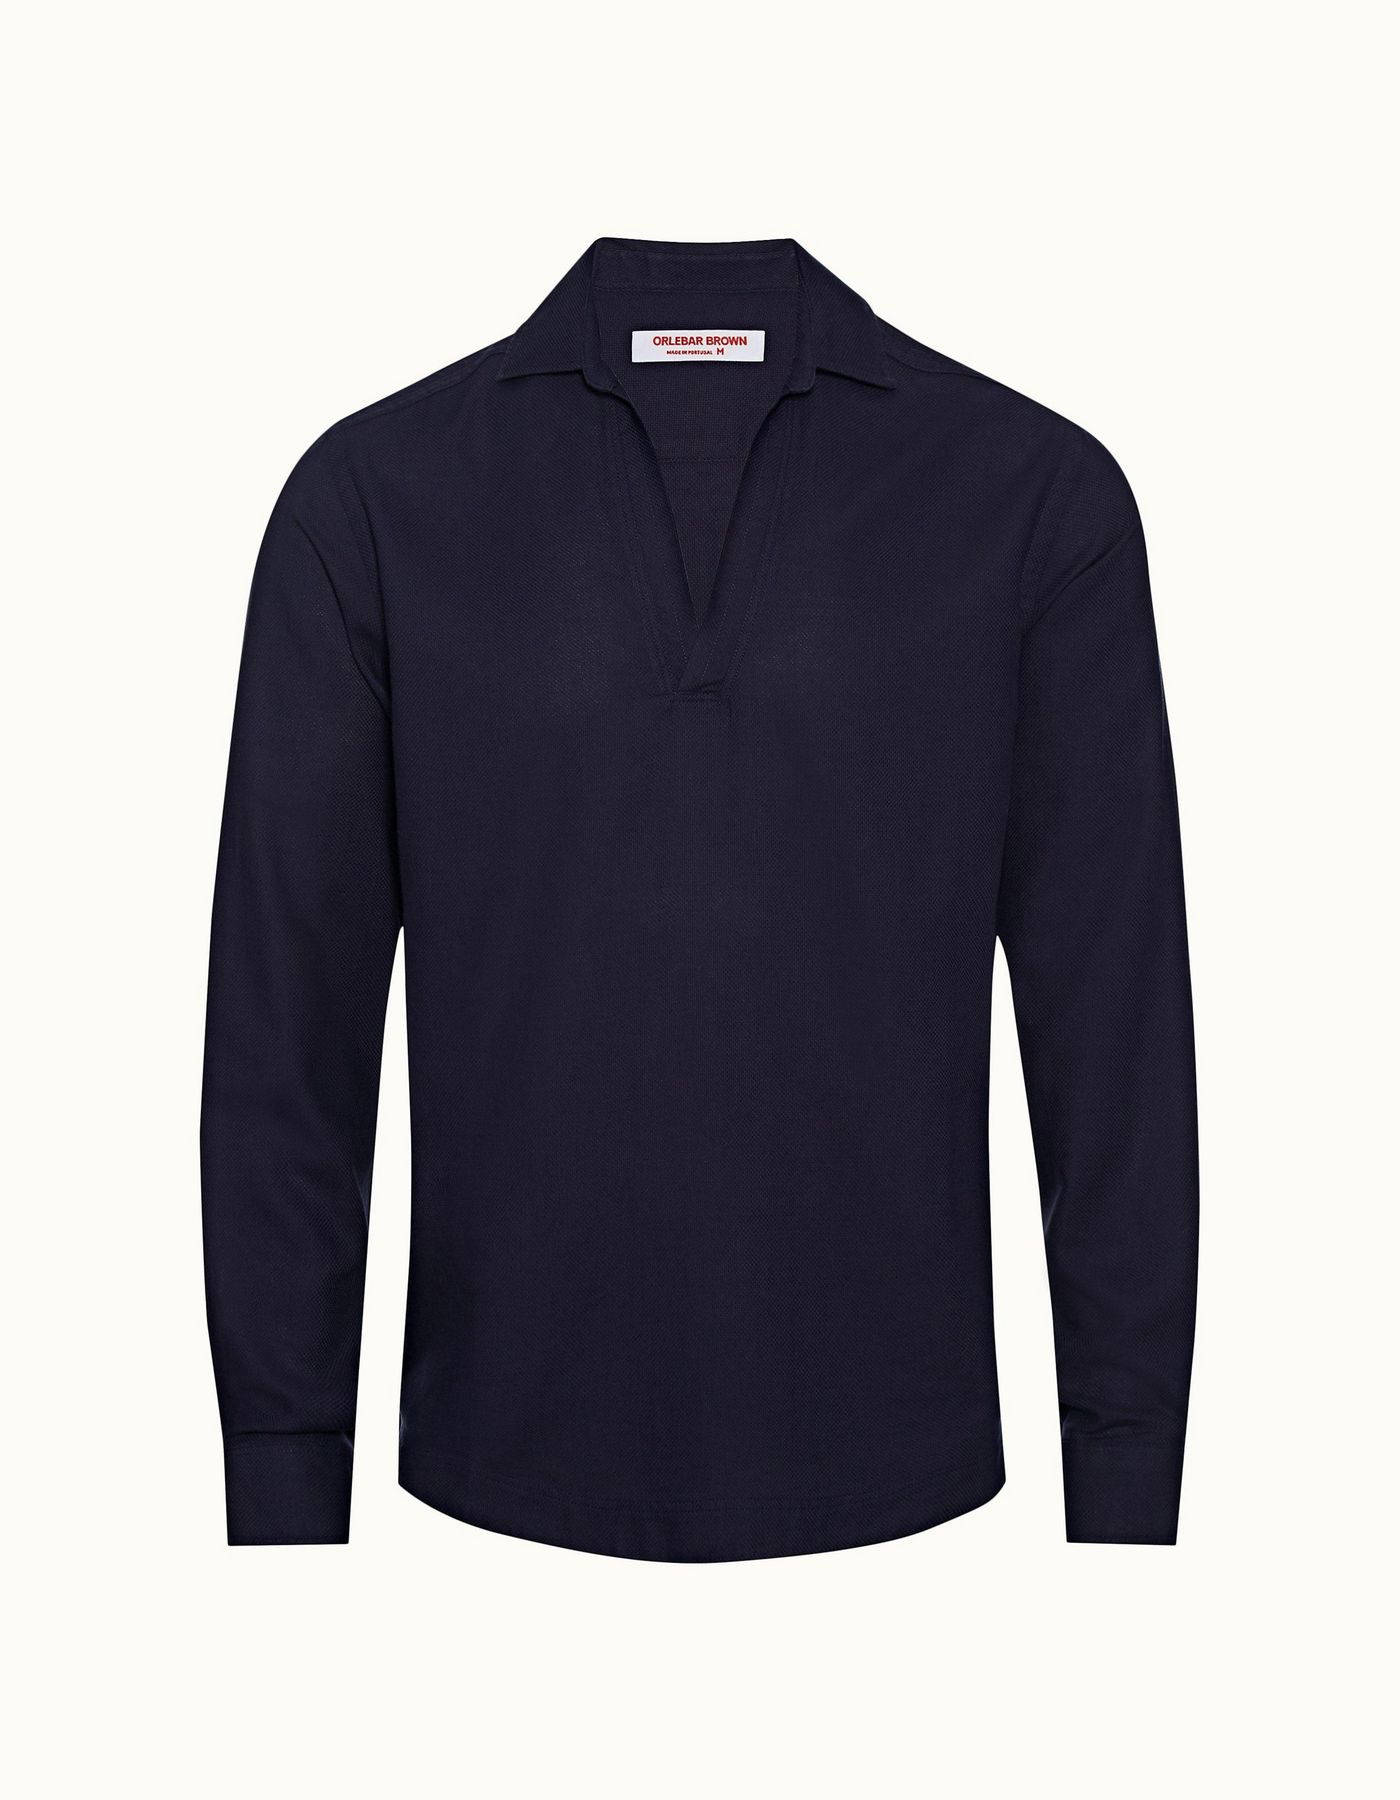 Ridley - Mens Navy Waffled Organic Cotton Pullover Shirt